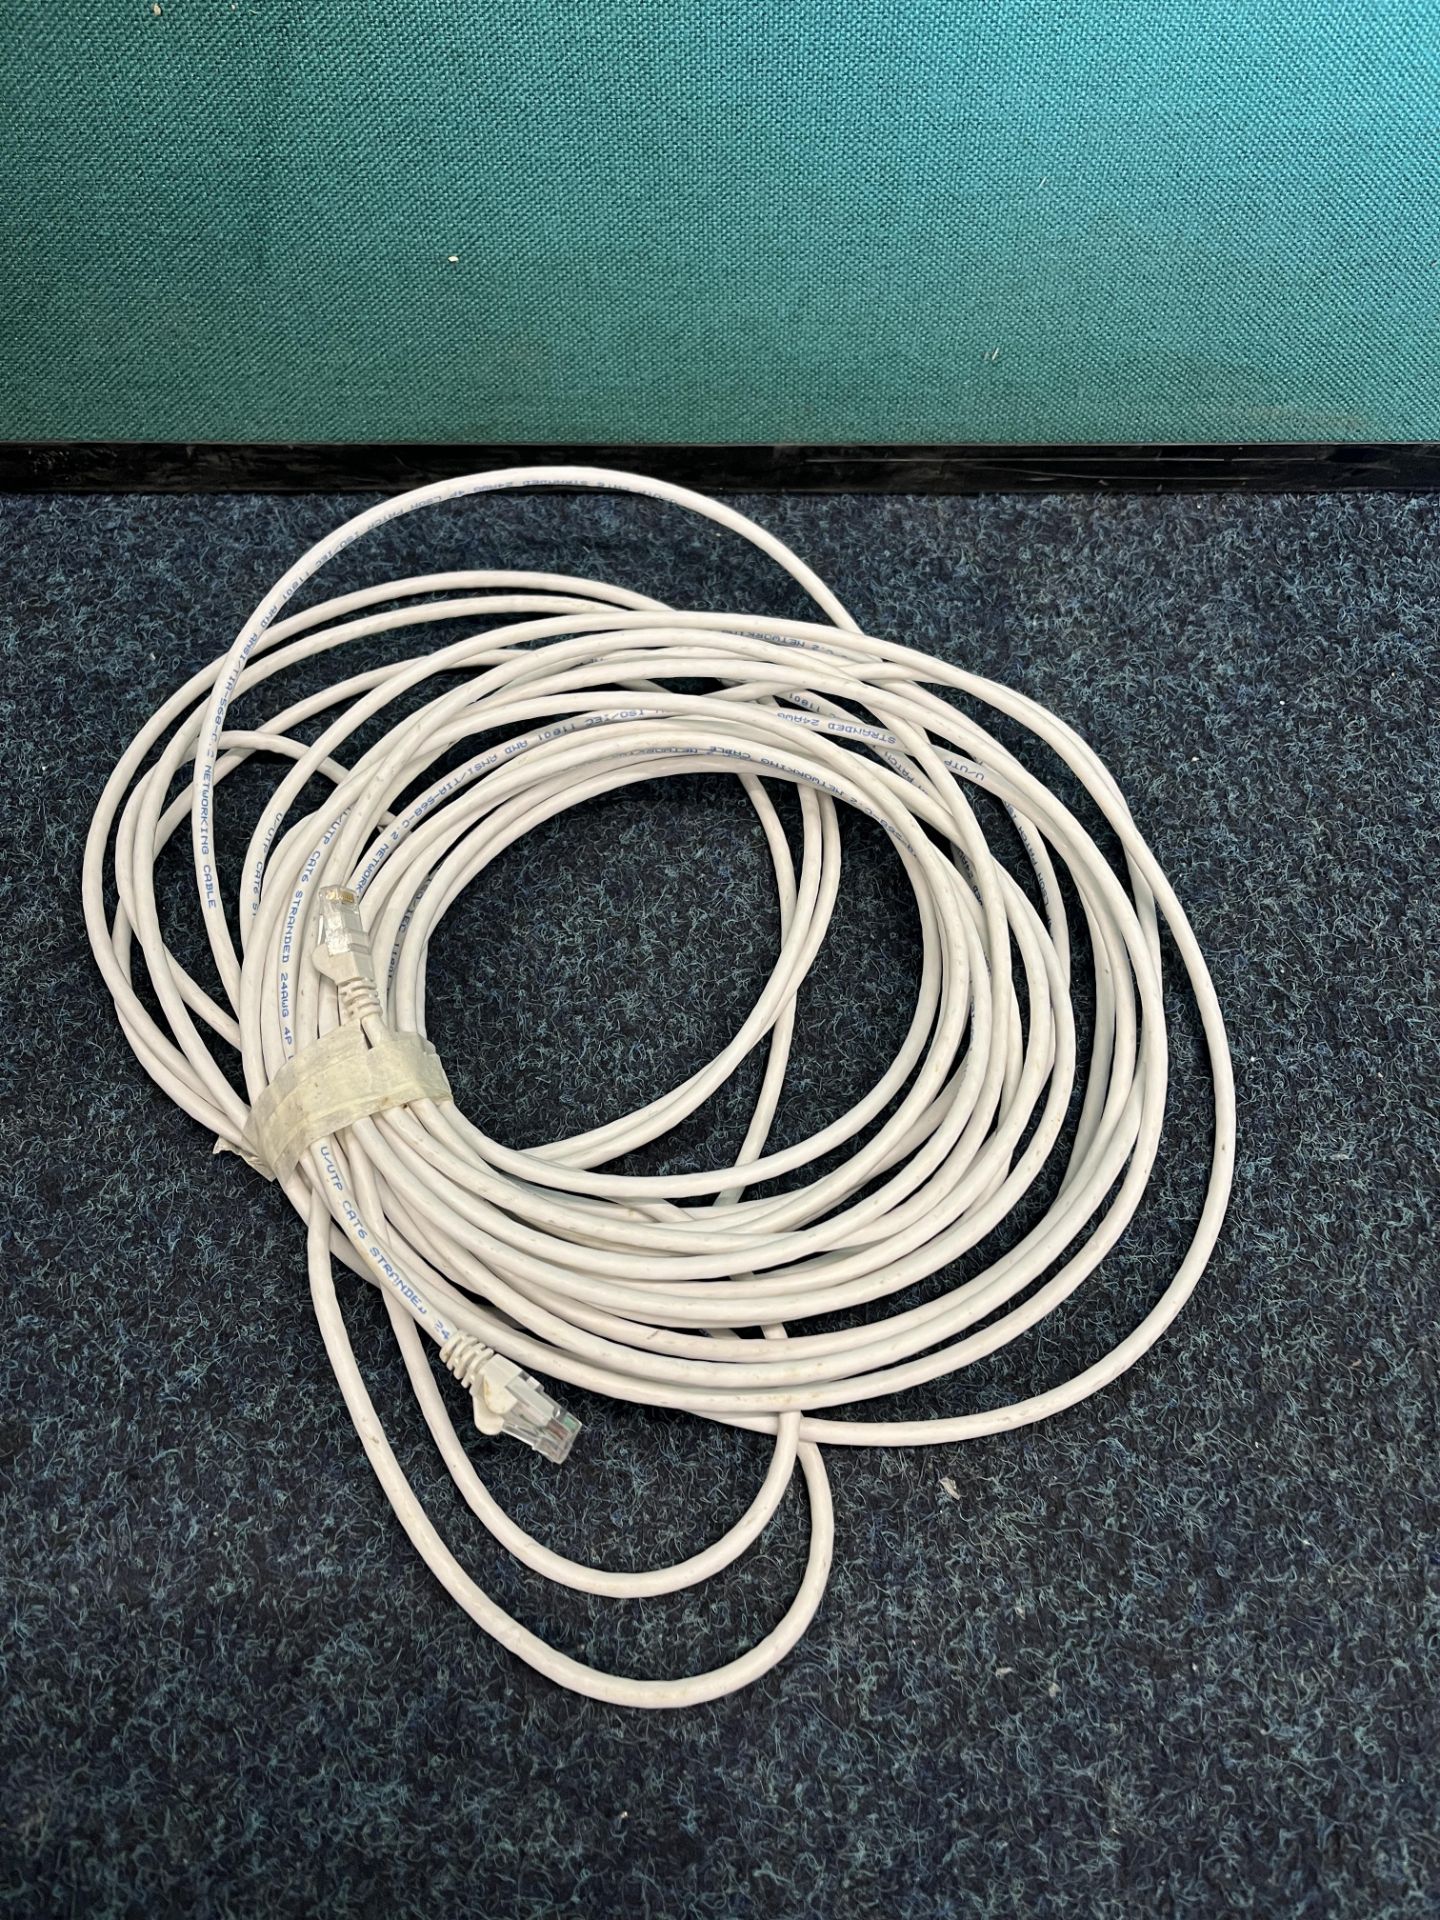 Various cabling - as pictured - Bild 3 aus 8